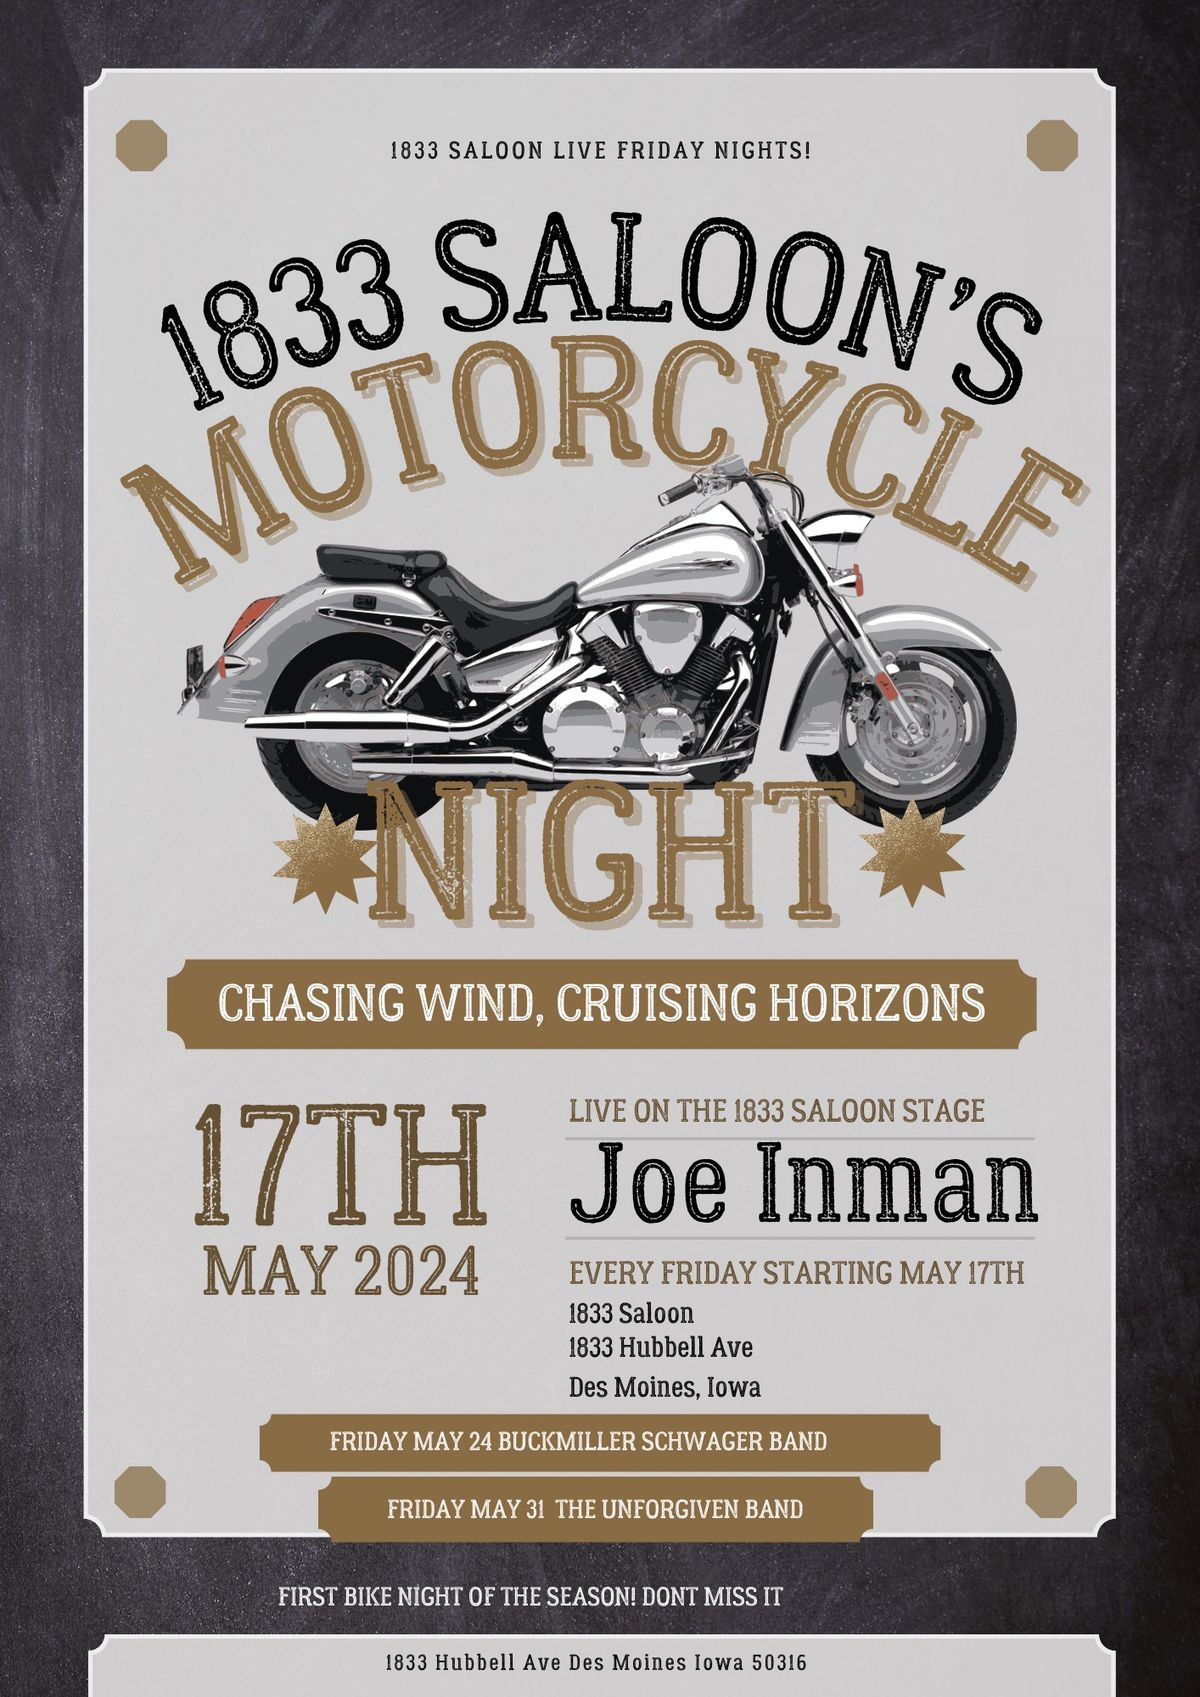 Joe Inman, LIVE at 1833 Saloon! And Bike Night!